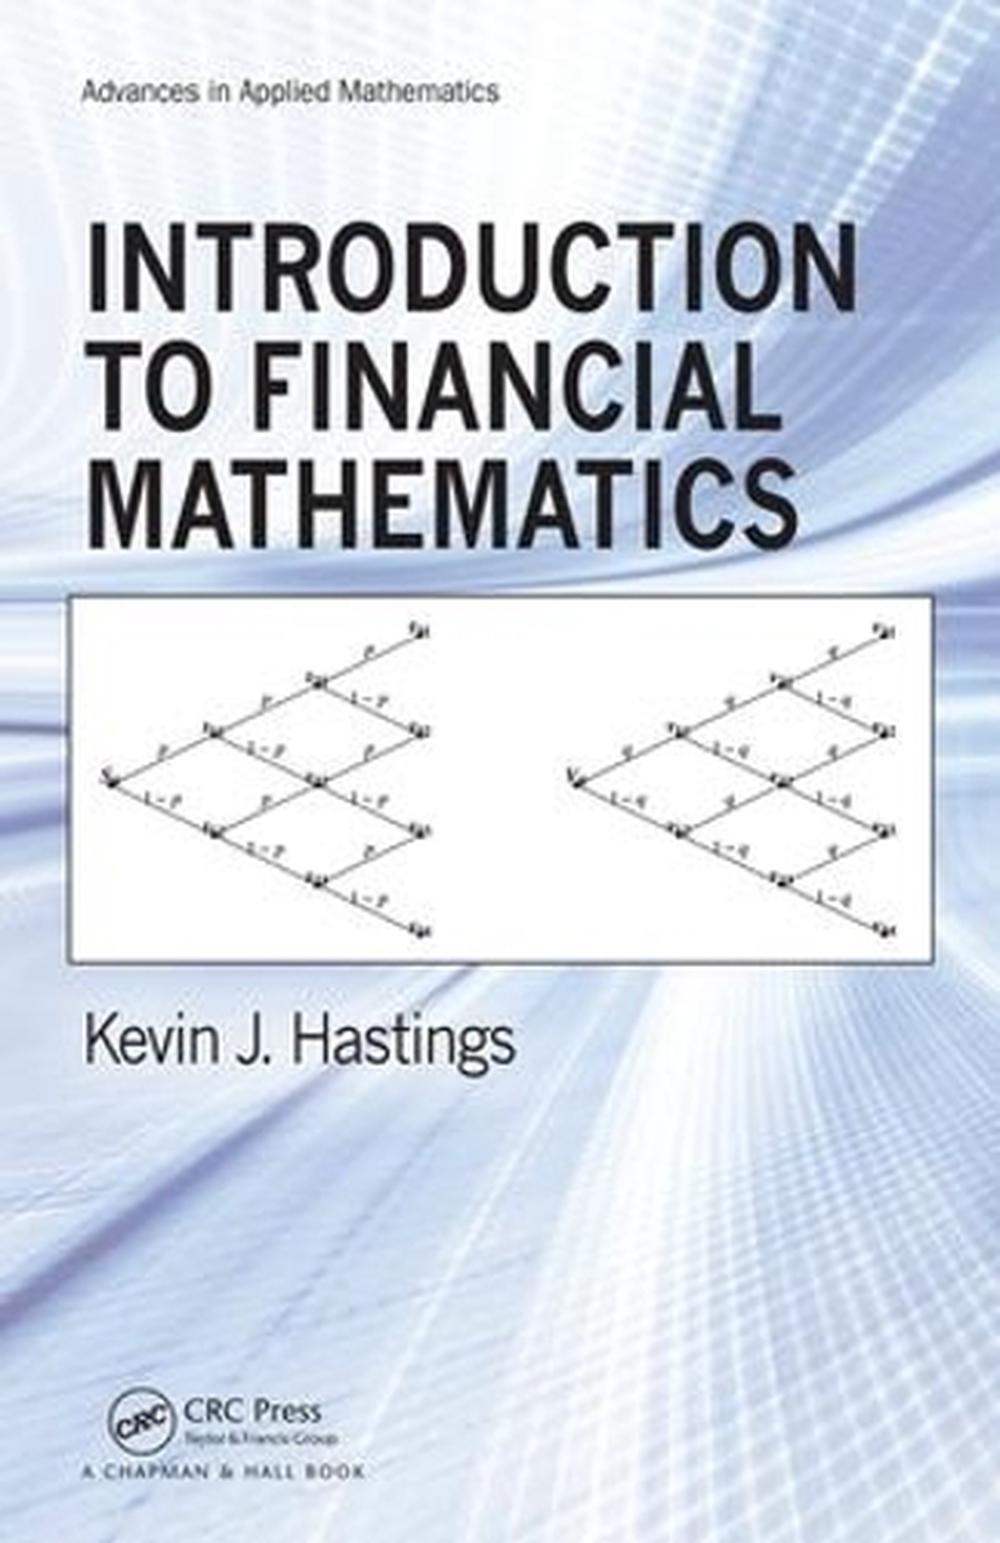 phd positions financial mathematics